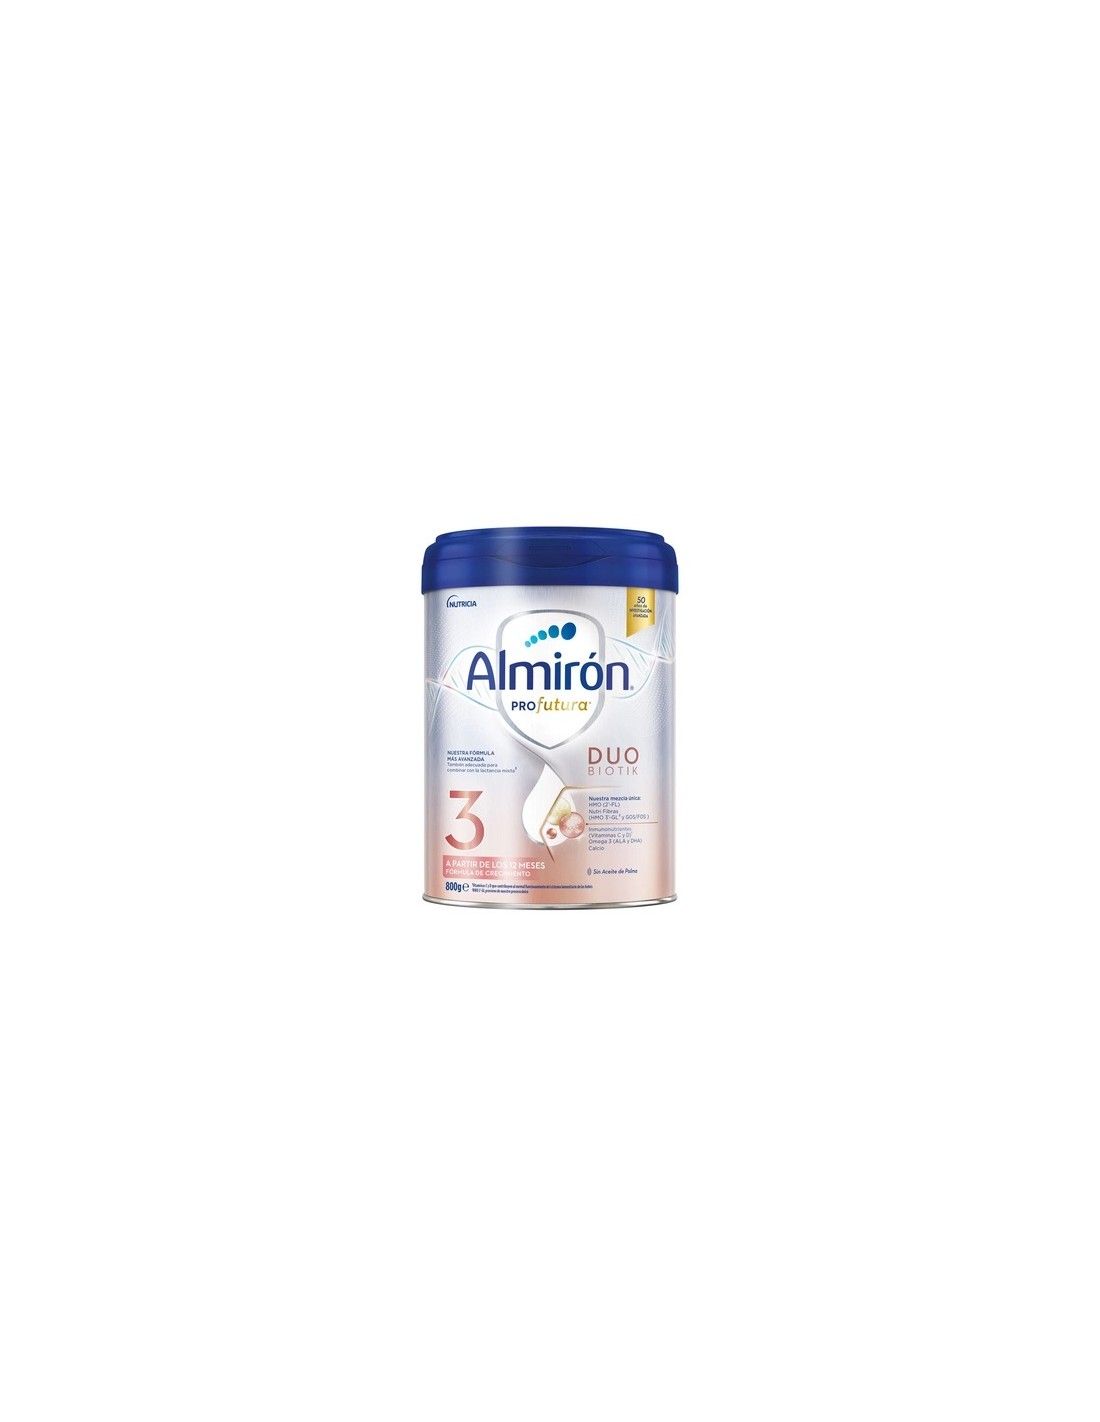 Buy Almiron Profutura+ 2 Powder 800 G. Deals on Almiron brand. Buy Now!!